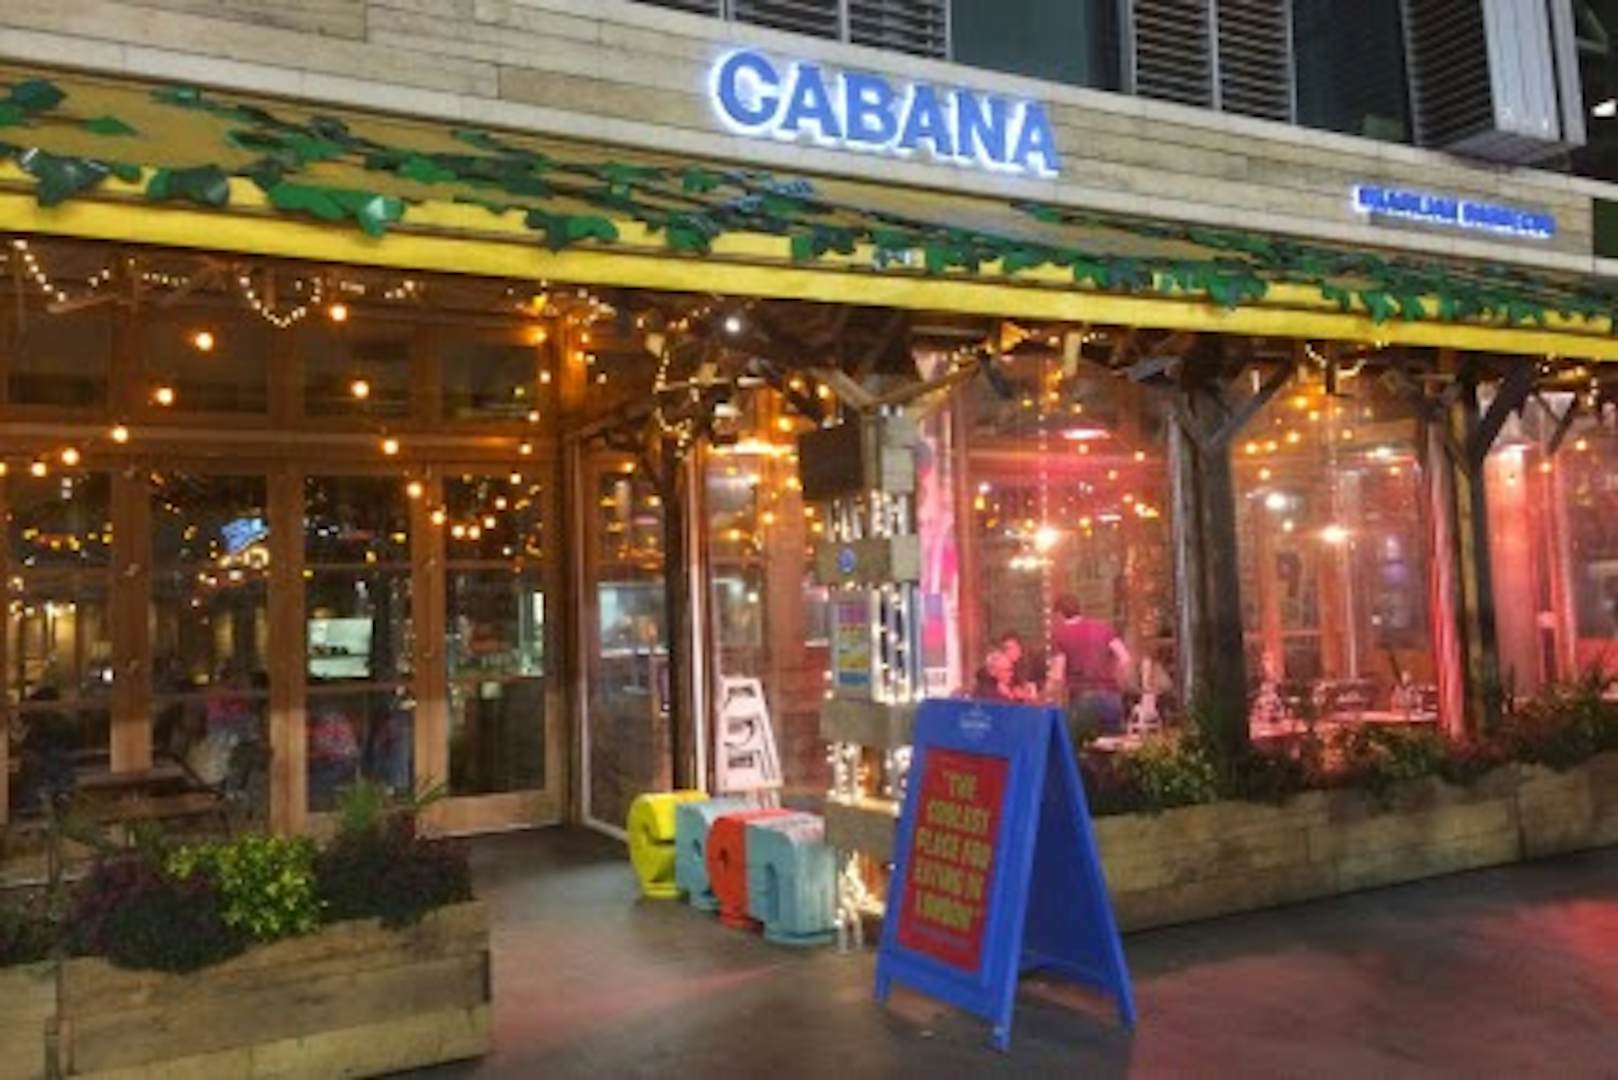 Cabana Brasilian Barbecue - Westfield White City Restaurant